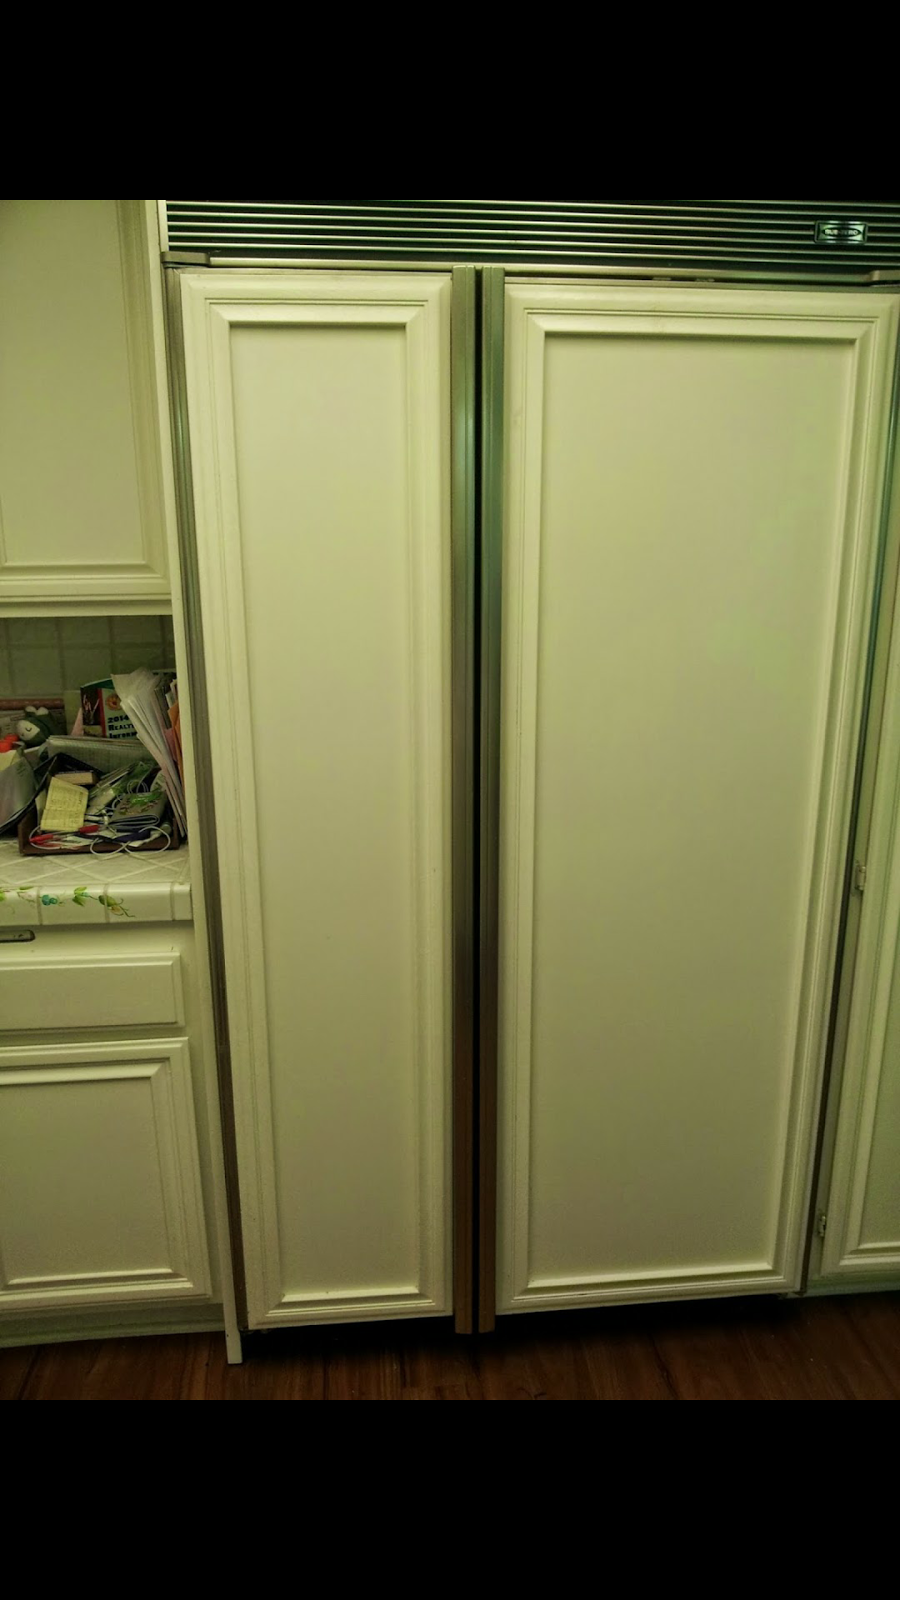 Chatsworth Refrigerator Repair | 20555 Devonshire St, Chatsworth, CA 91311 | Phone: (818) 578-2611